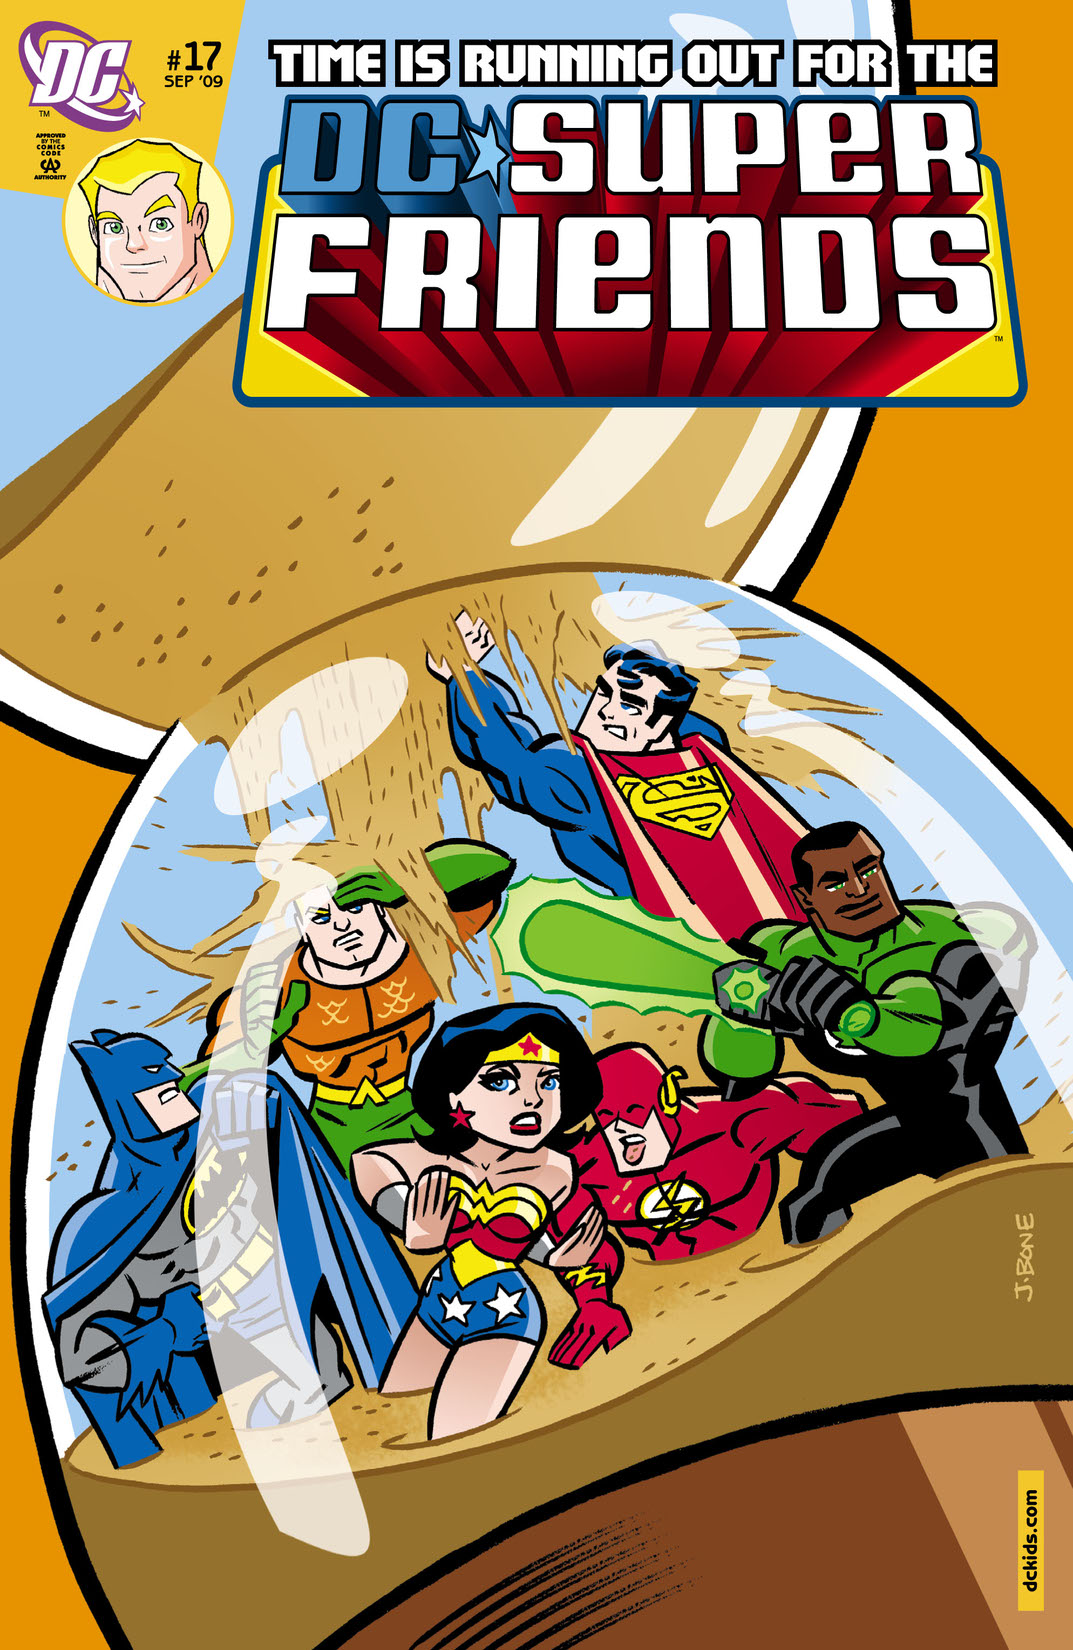 Super Friends (2008-) #17 preview images